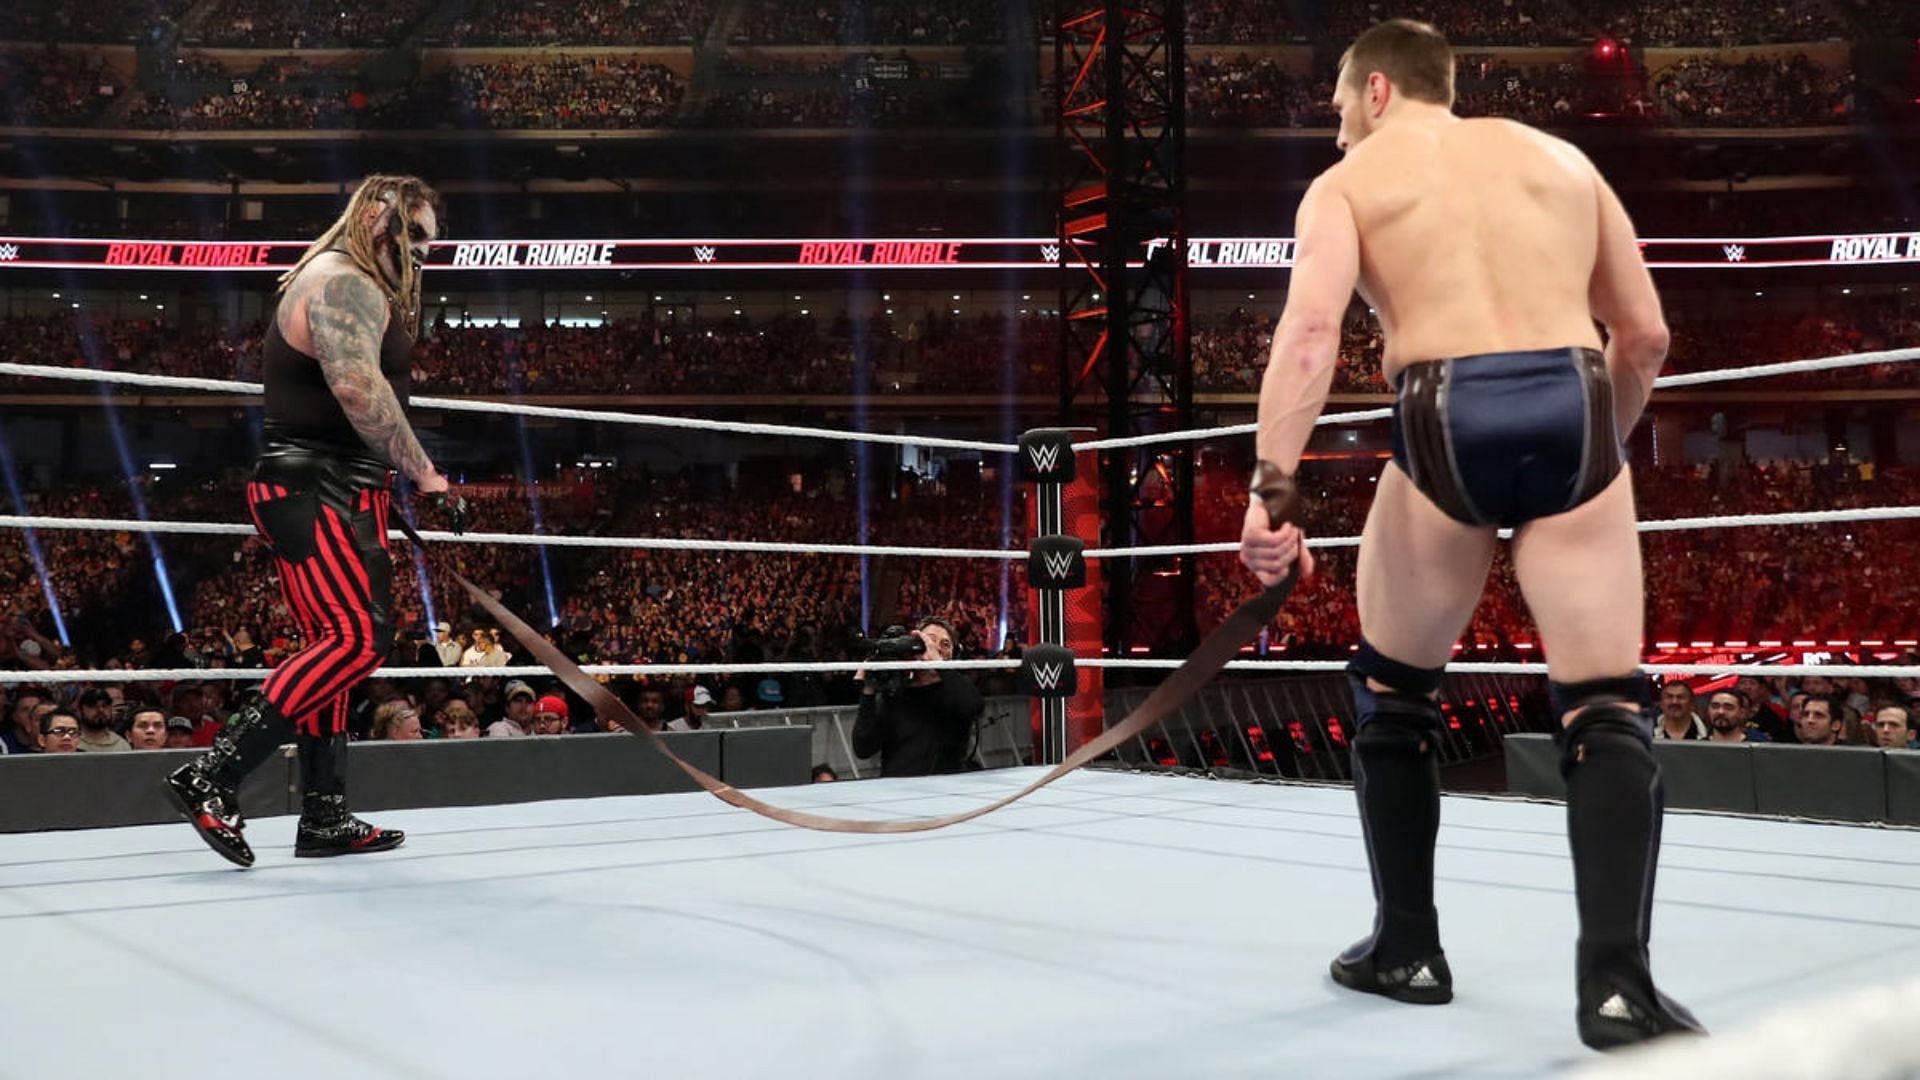 Bray Wyatt fought Daniel Bryan in a strap match at Royal Rumble 2020